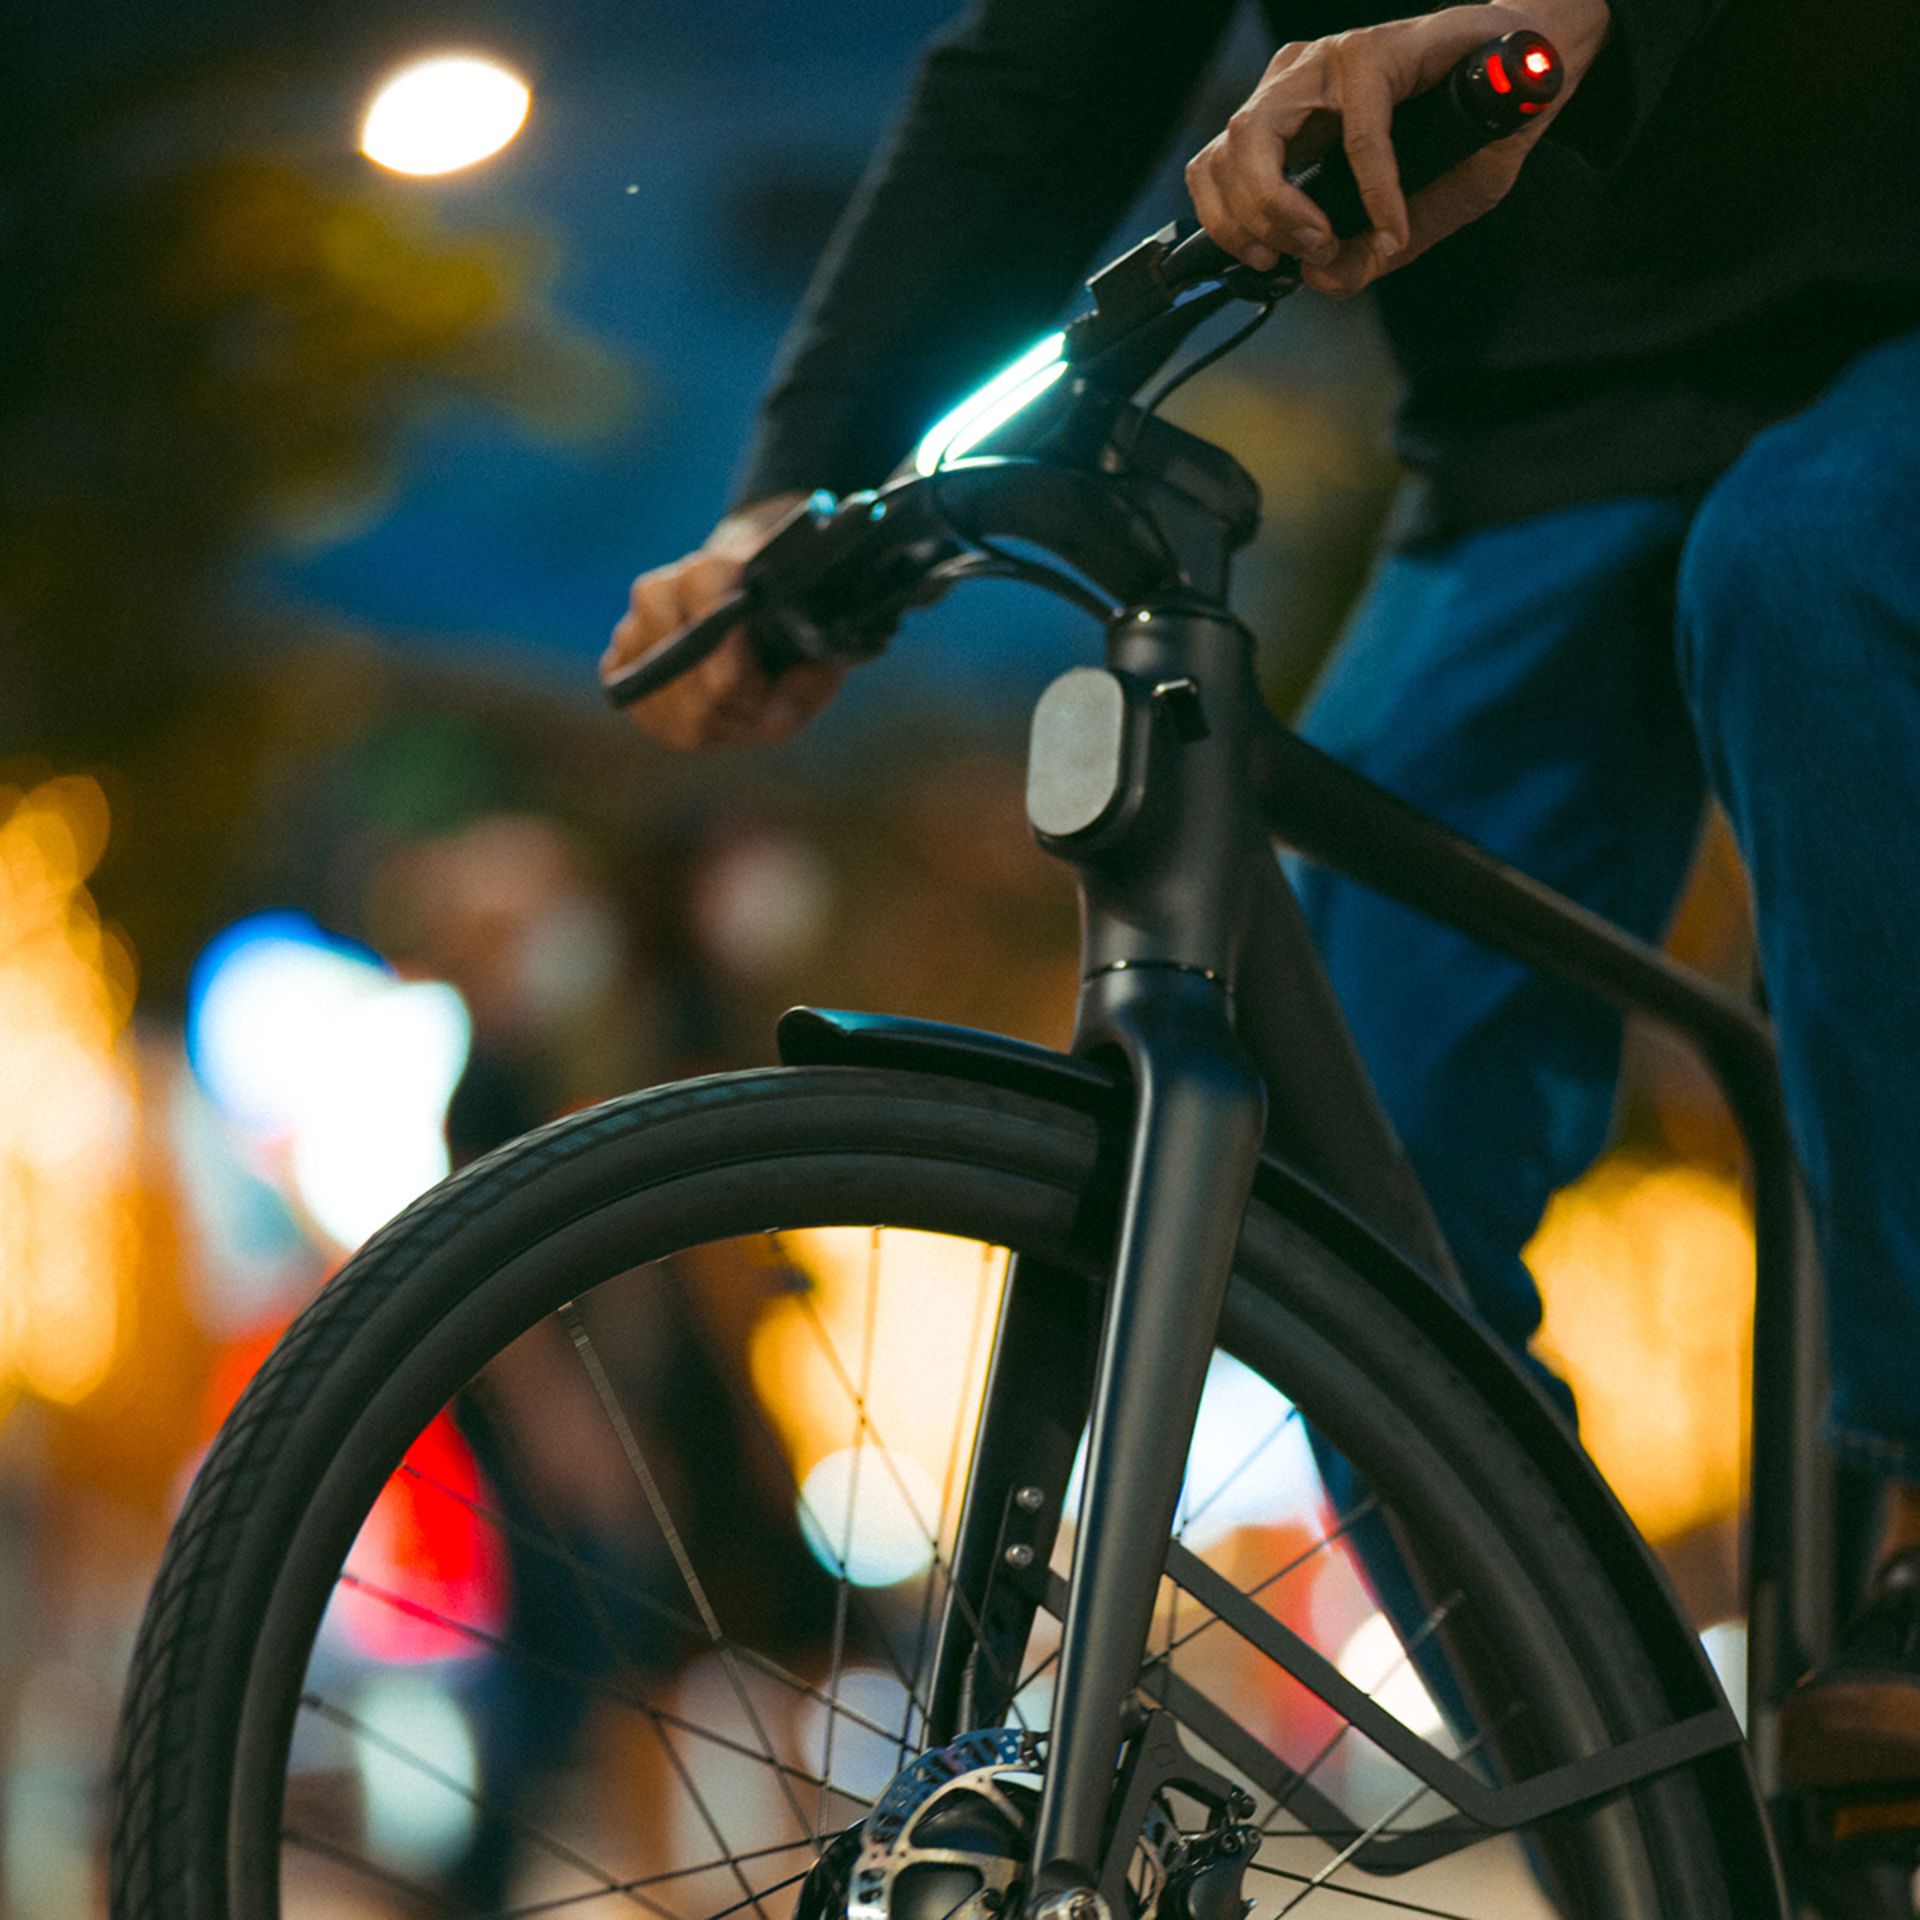 Modmo Saigon+ Electric Bicycle - RRP £2800 - Size M (Rider: 140-155cm) - Bild 15 aus 19